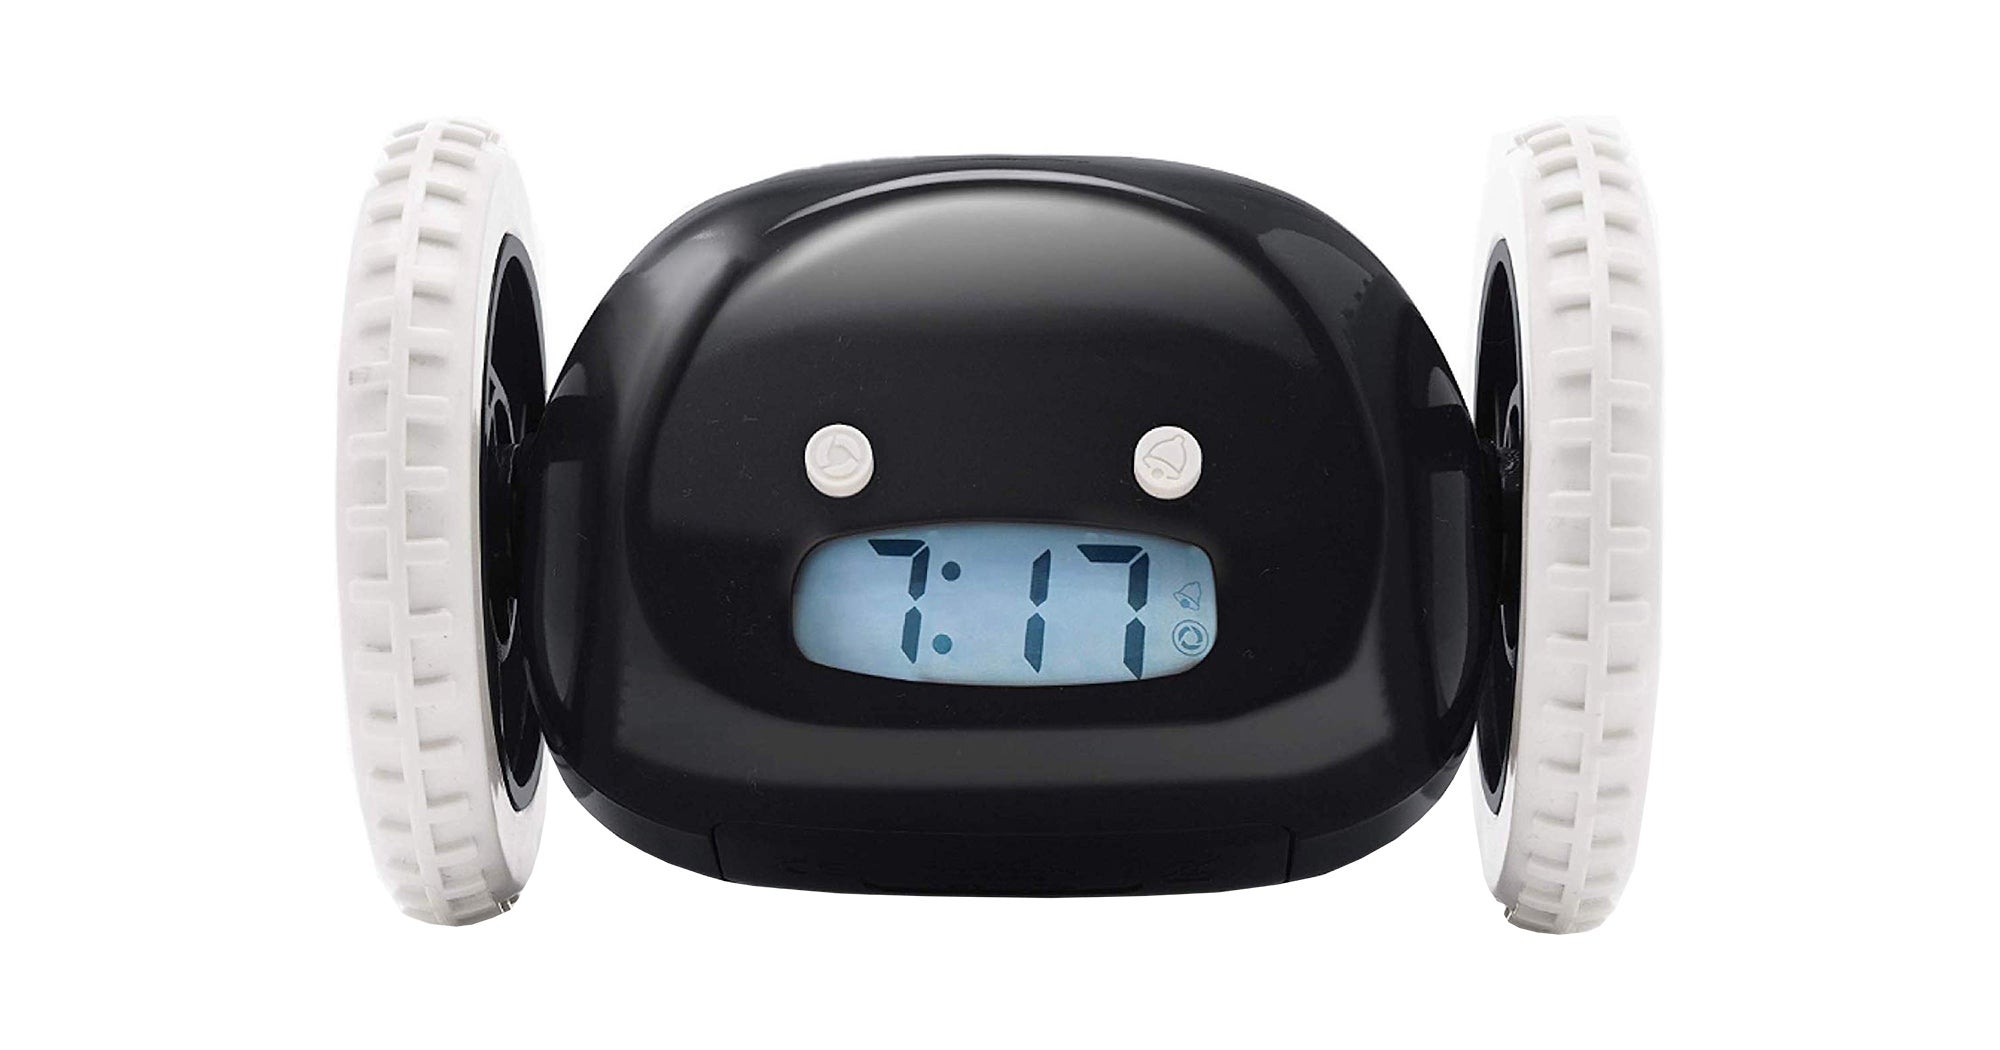 alarm clock for heavy sleepers